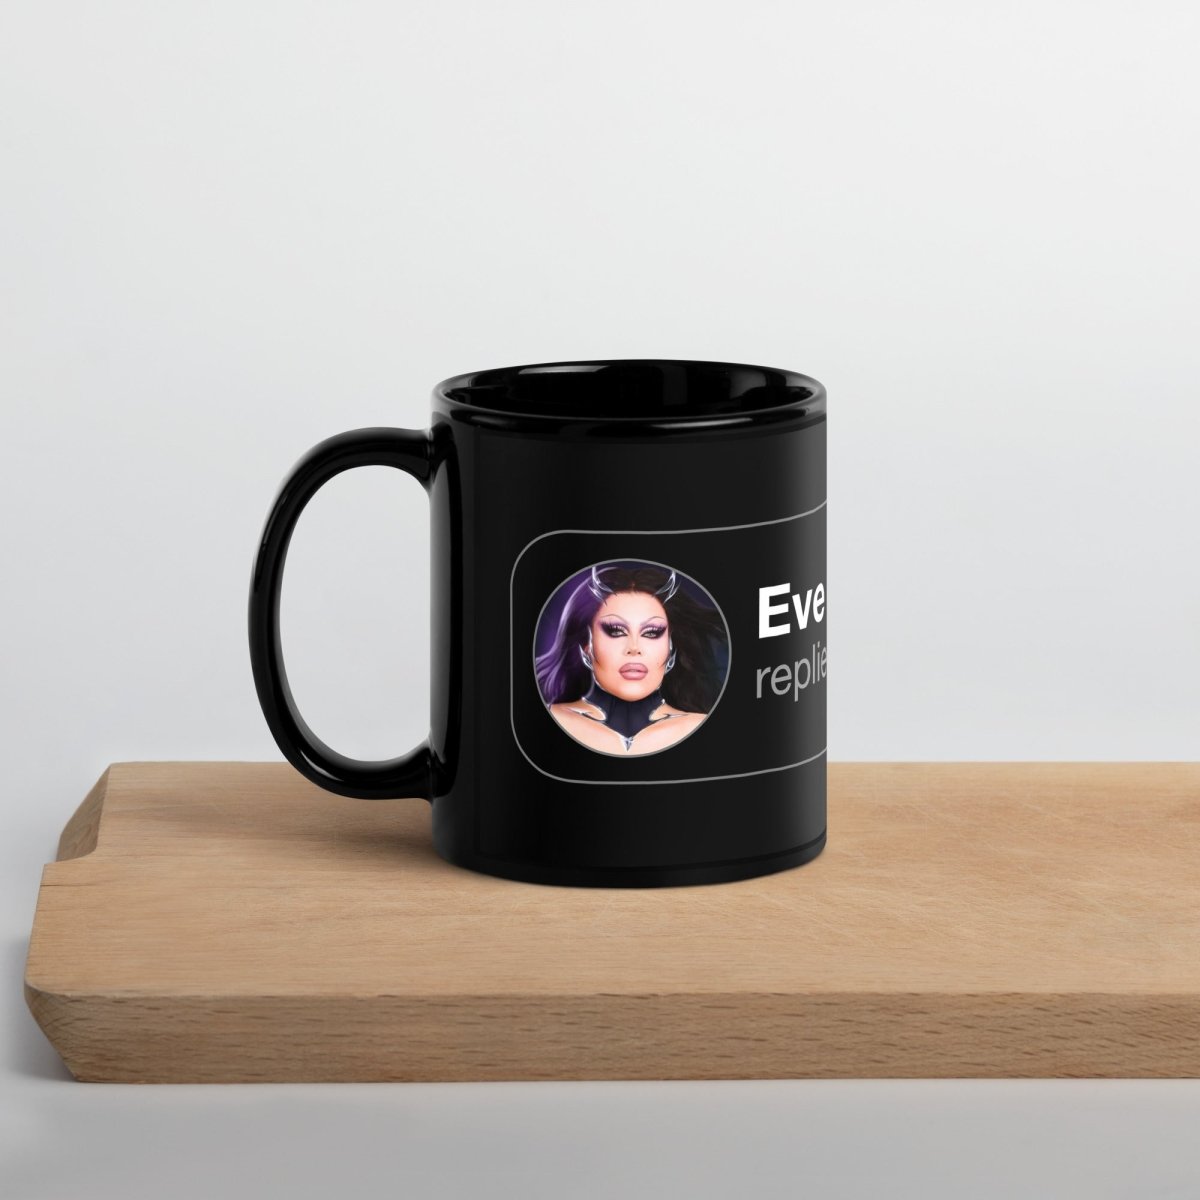 Eve 6000 - Replied Black Glossy Mug - dragqueenmerch